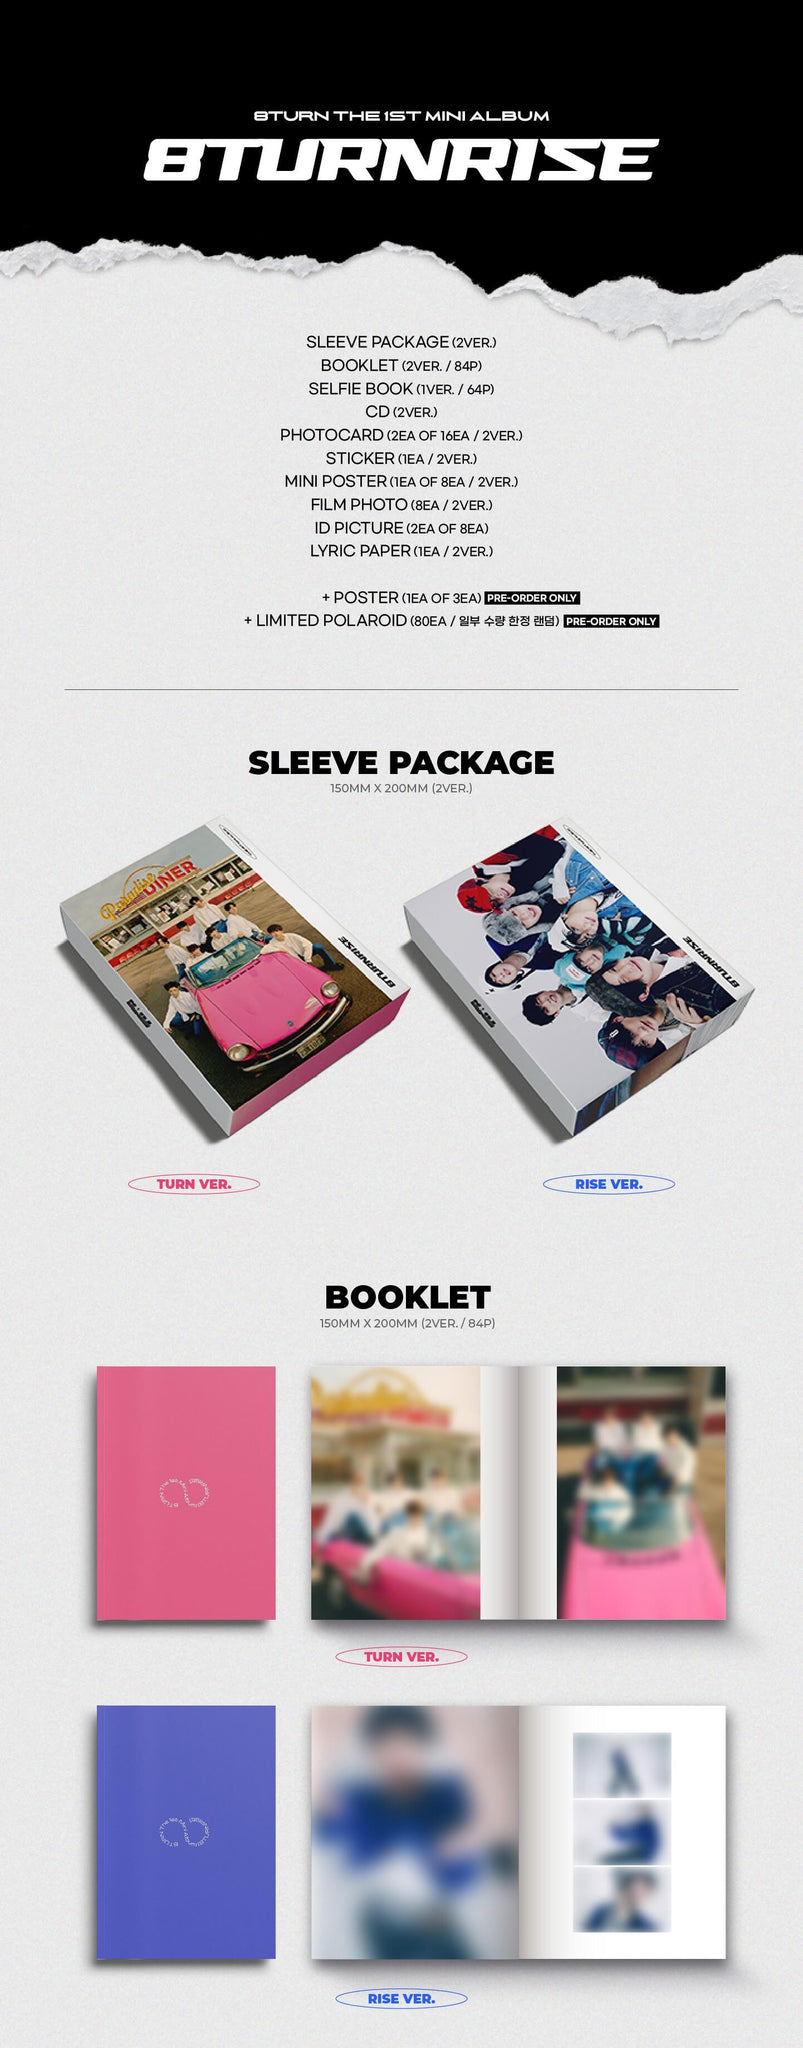 8TURN 1st Mini Album 8TURNRISE Inclusions Sleeve Package Booklet